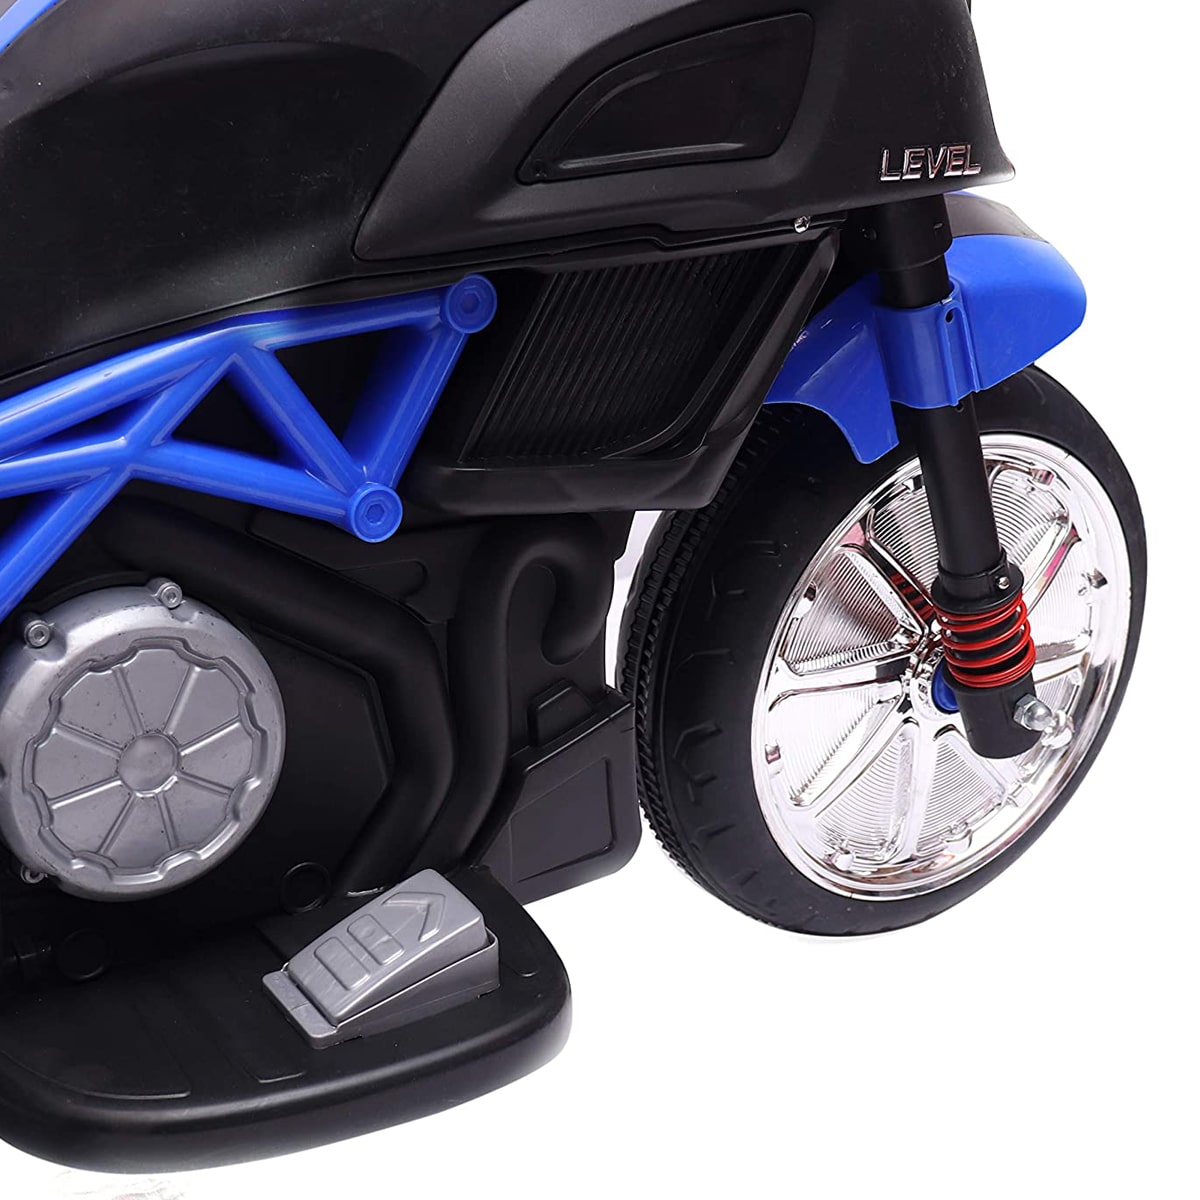 kids ride on bike 3 wheel ducati children's bike model PL-6688 | Indian Making